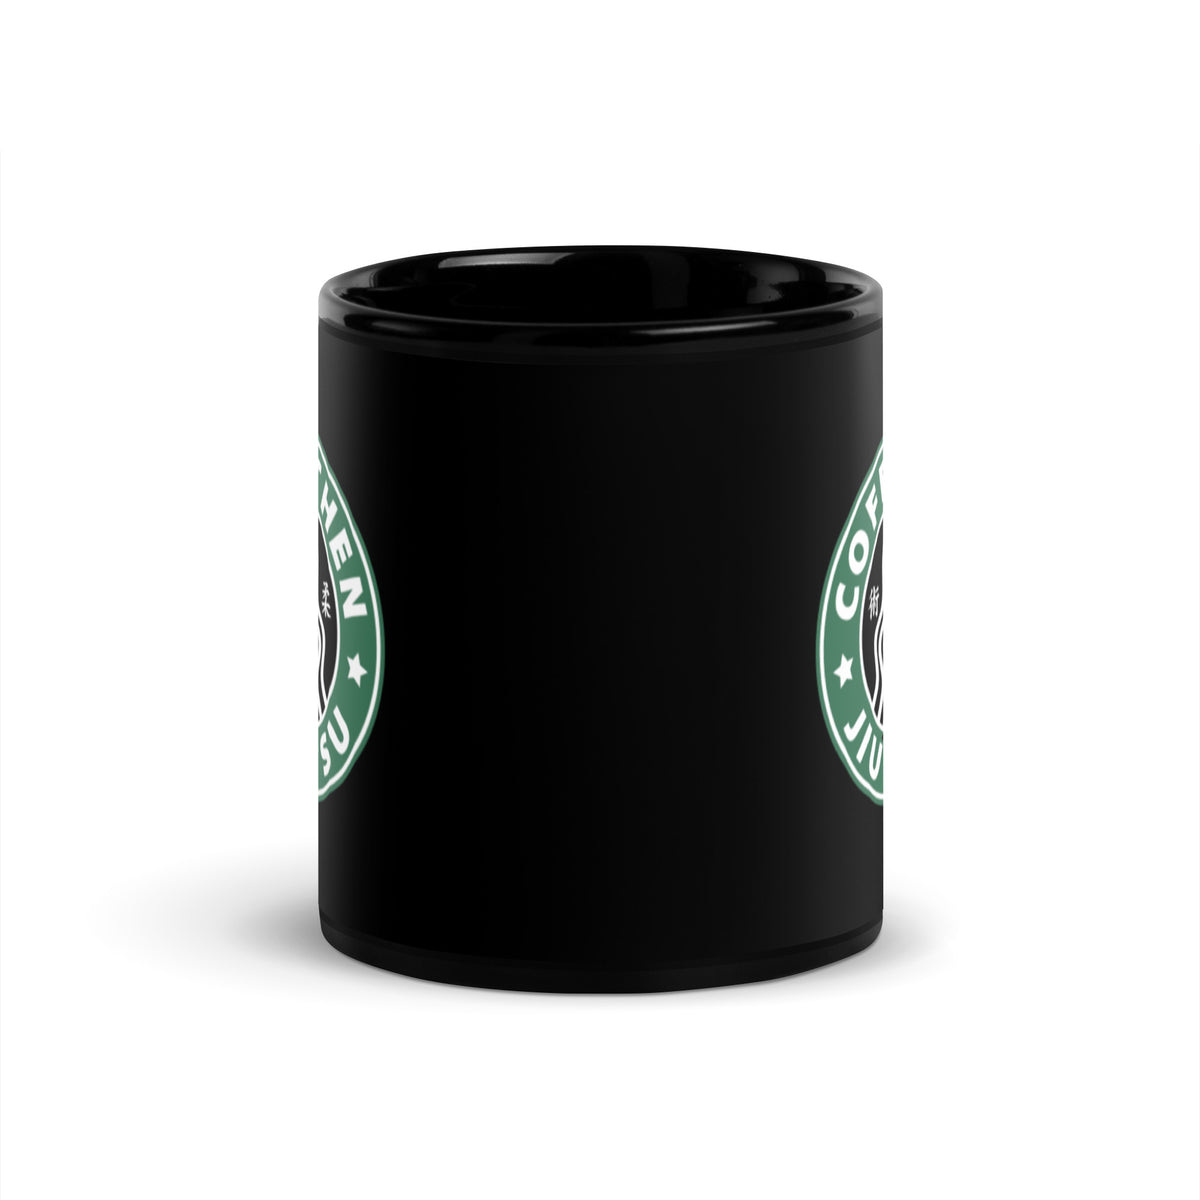 Jiu Jitsu Then Coffee Green Starbucks - Black Glossy Mug